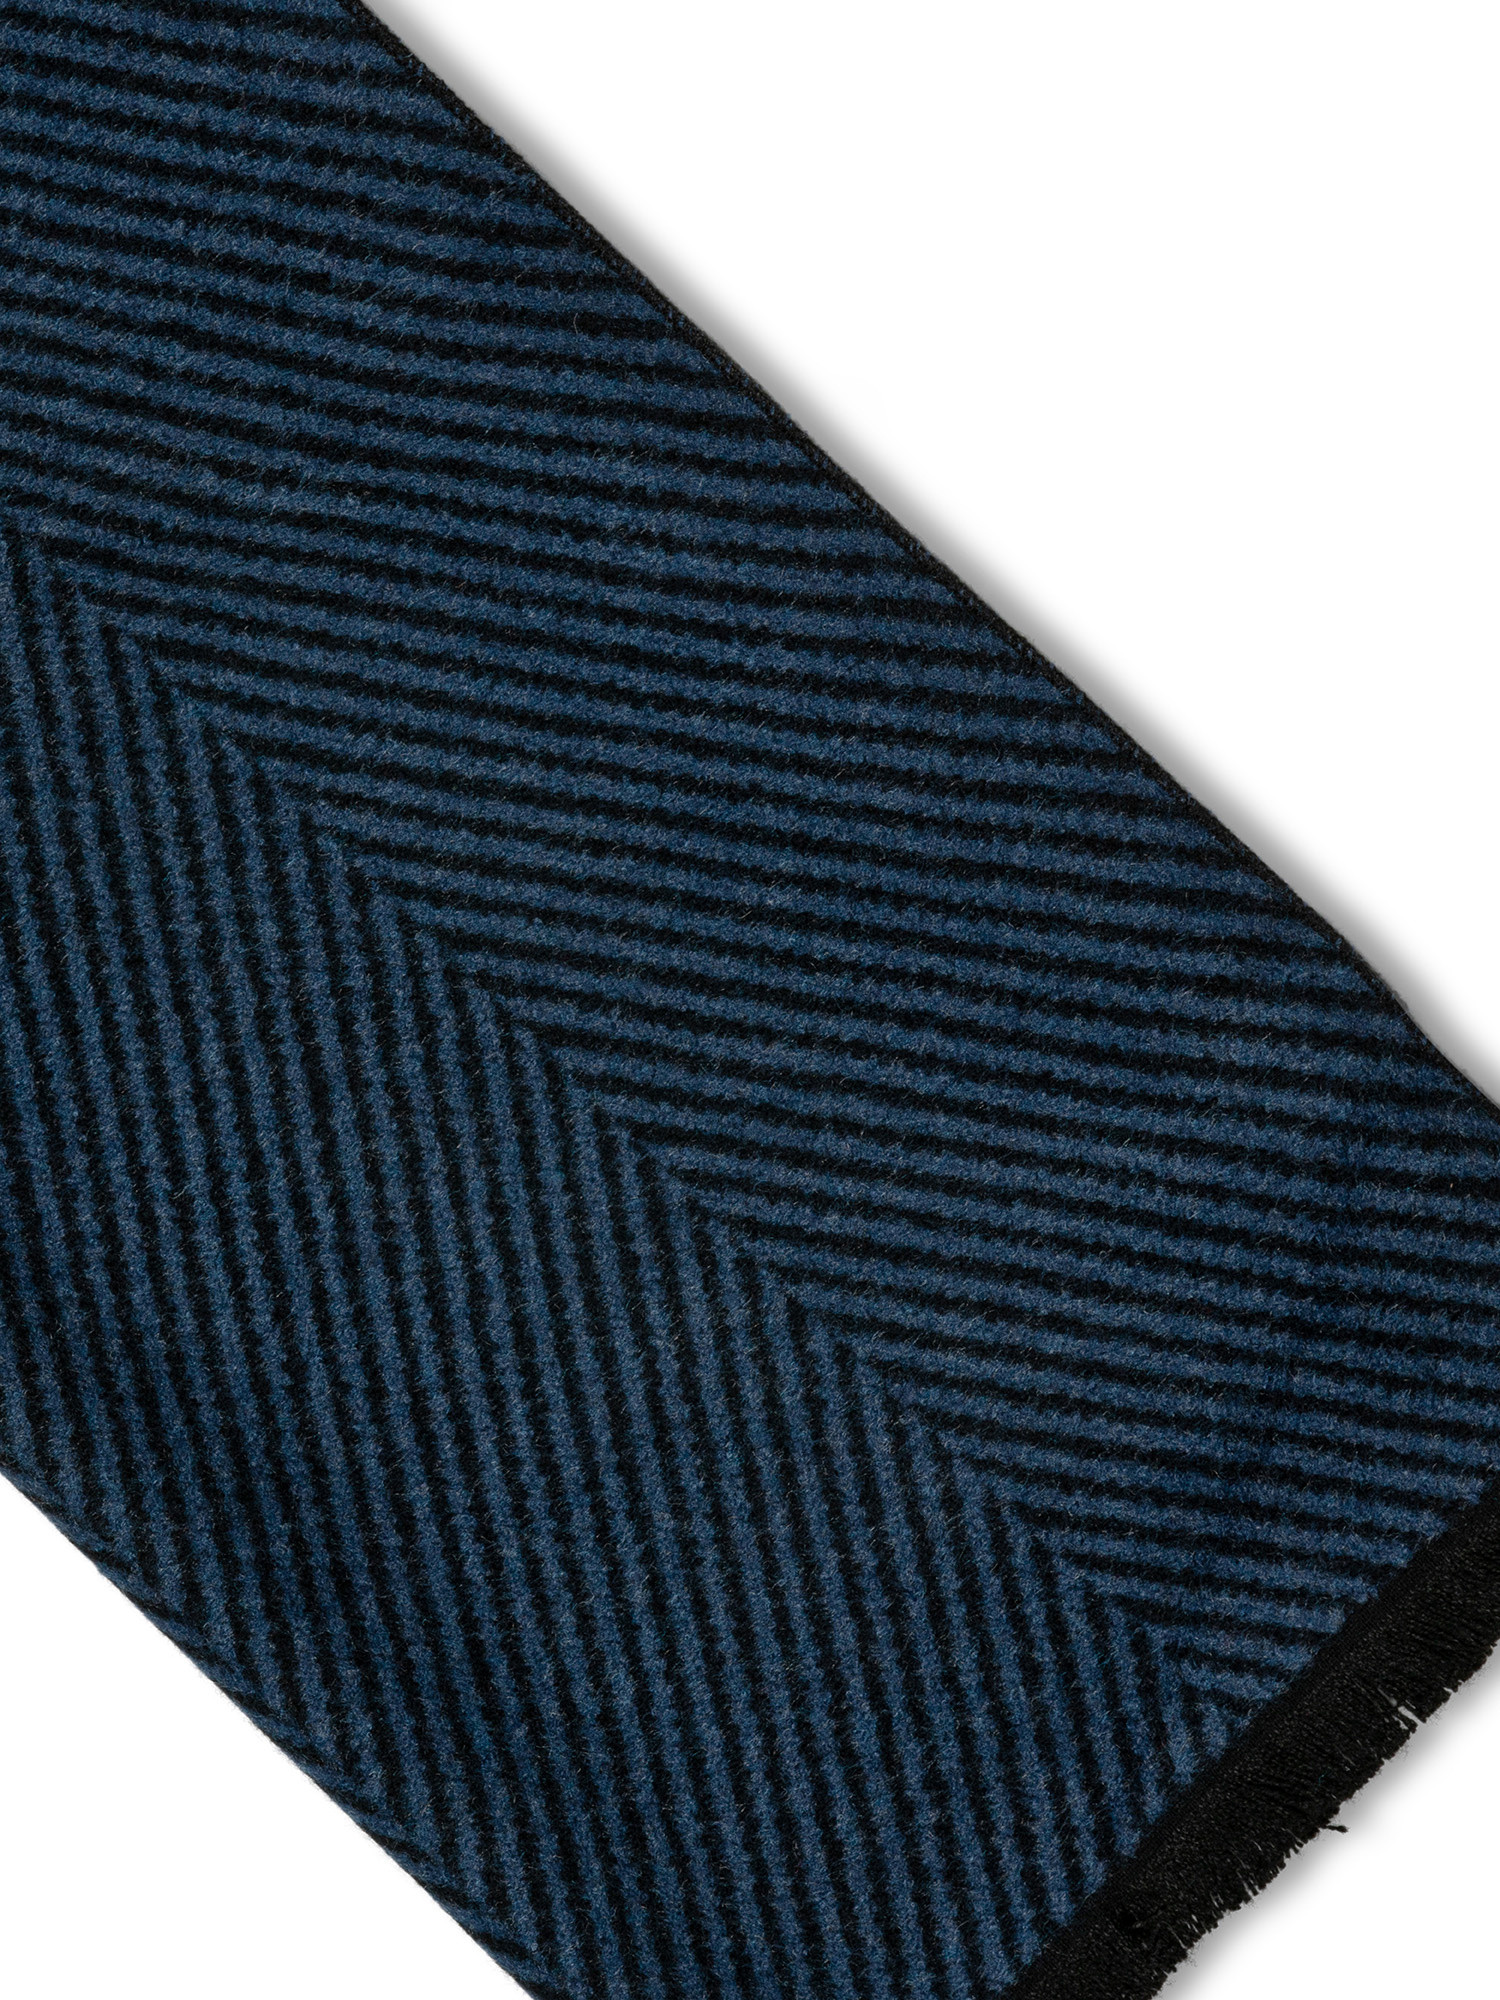 Luca D'Altieri - Scarf in herringbone fabric, Dark Blue, large image number 1